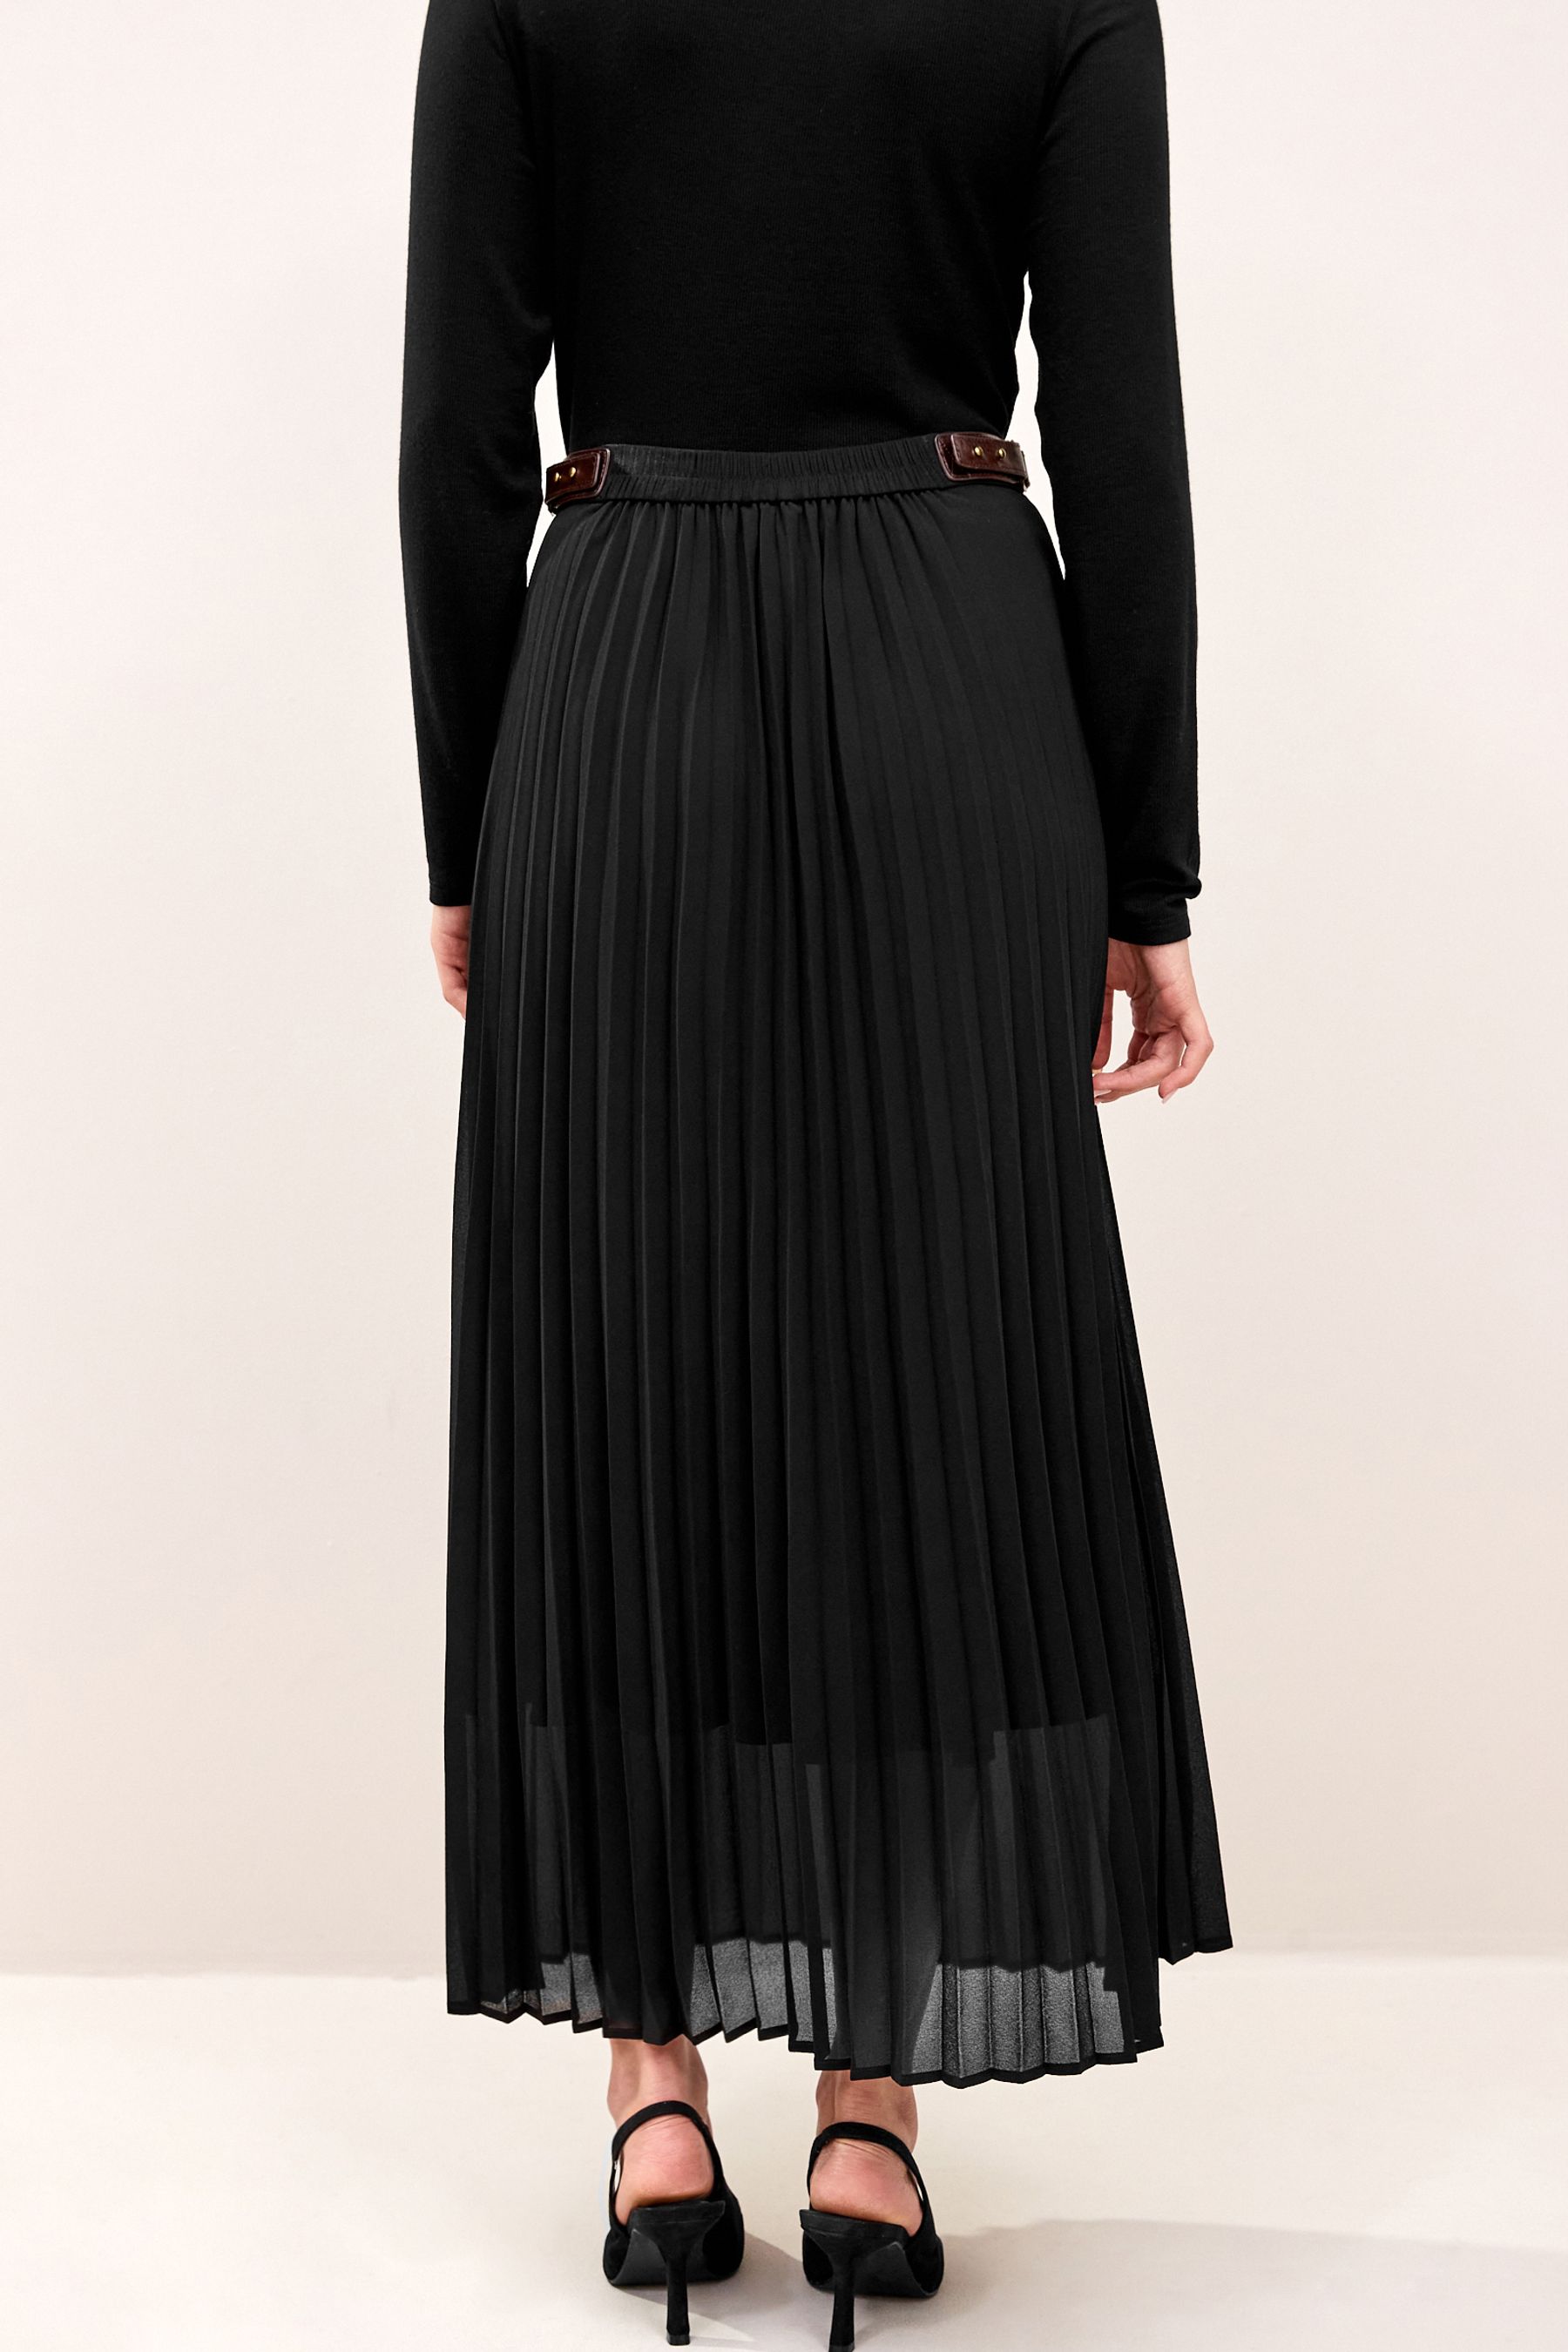 Buy Black Midi Pleated Skirt from Next Israel